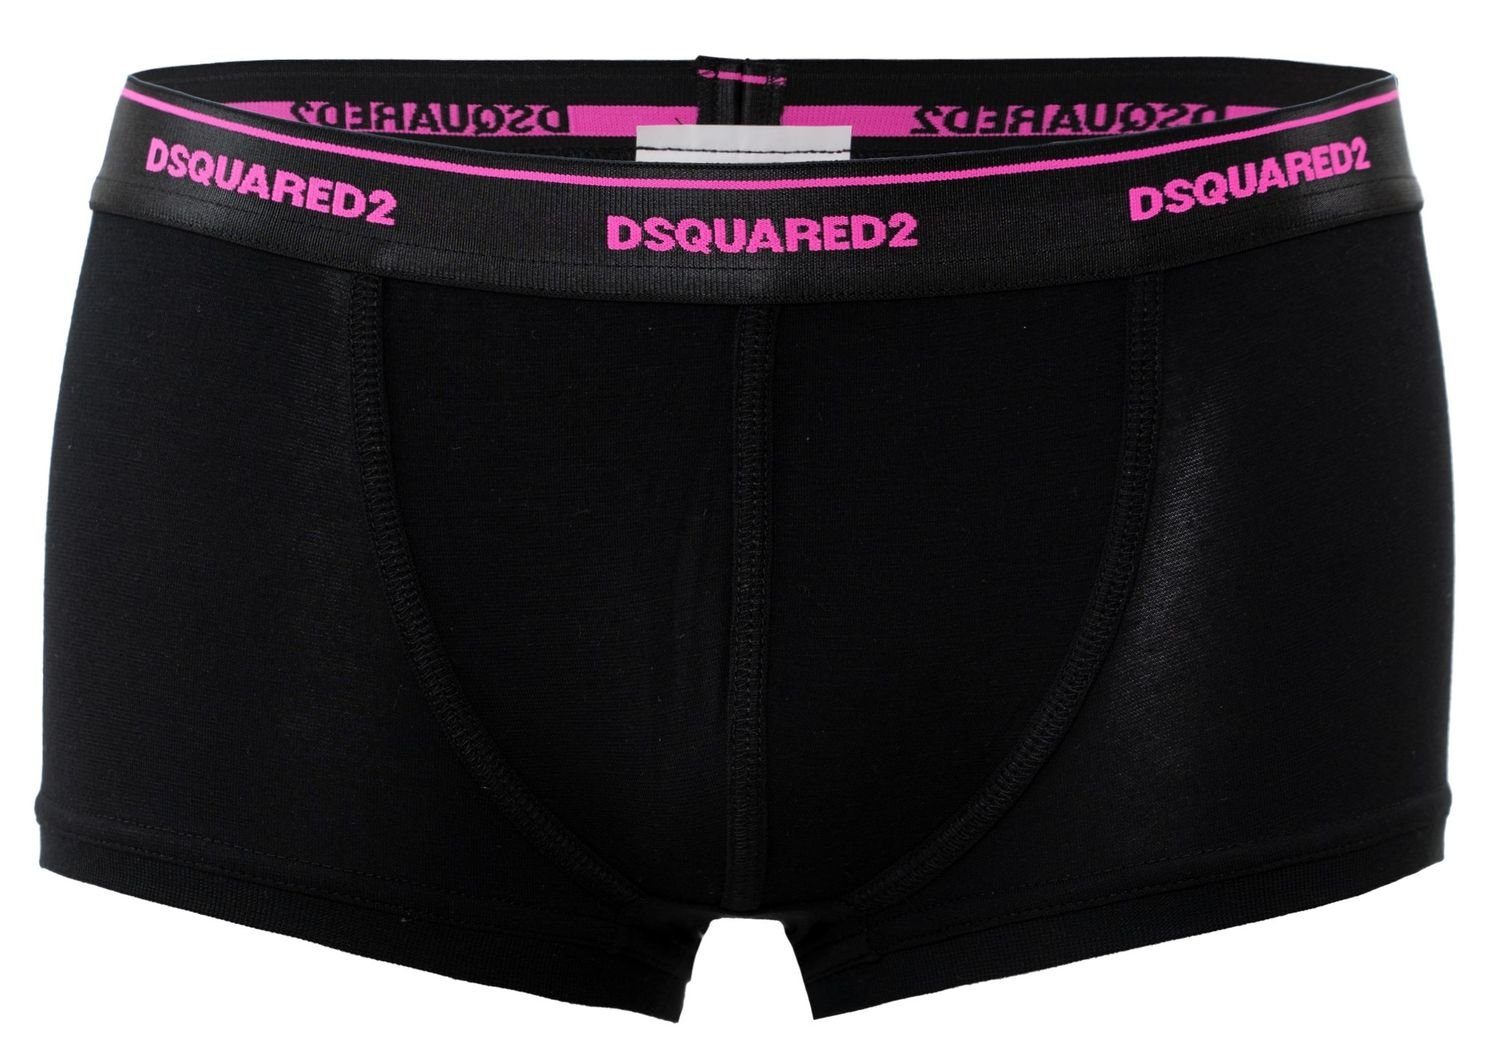 Wäsche/Bademode Boxershorts Dsquared2 Trunk Dsquared2 Boxershorts / Pants / Shorts / Boxer in schwarz Größe M / L / XL / XXL (1 